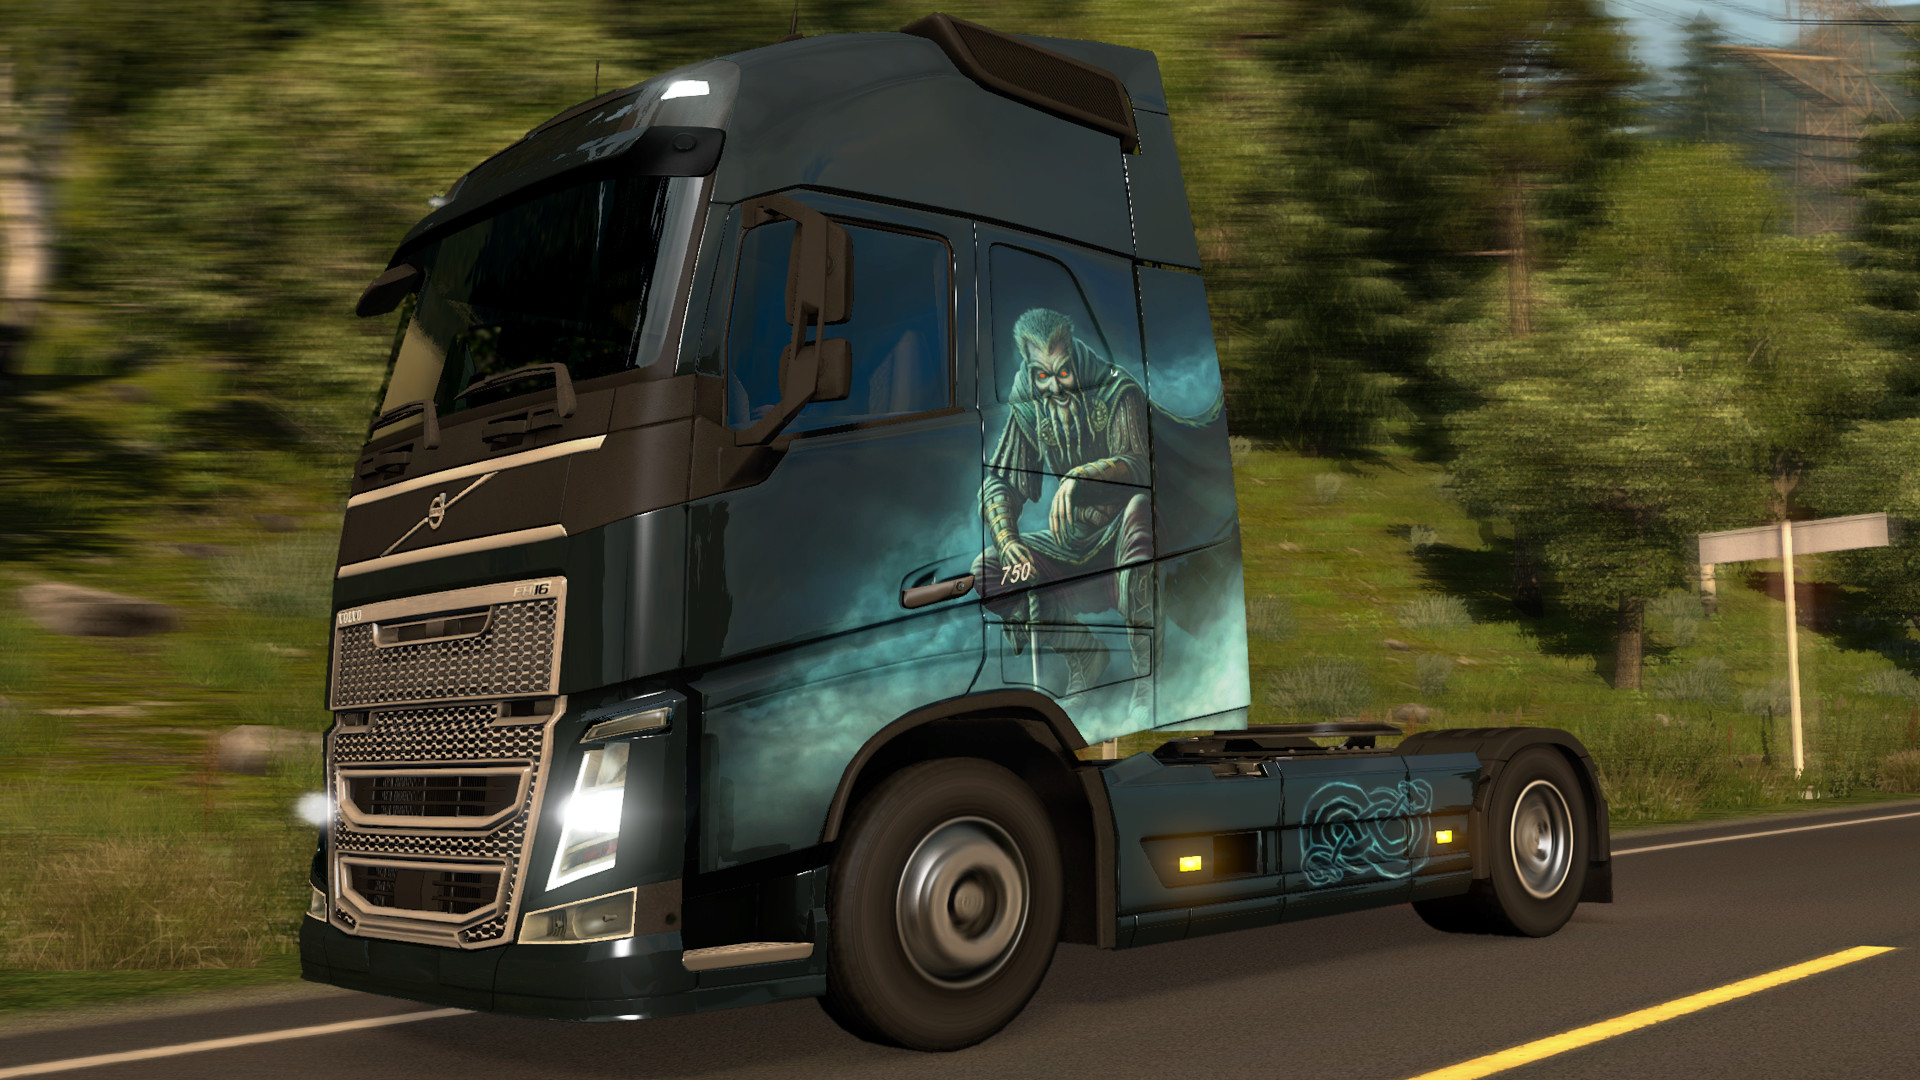 Euro truck simulator 2 - viking legends download for macbook pro